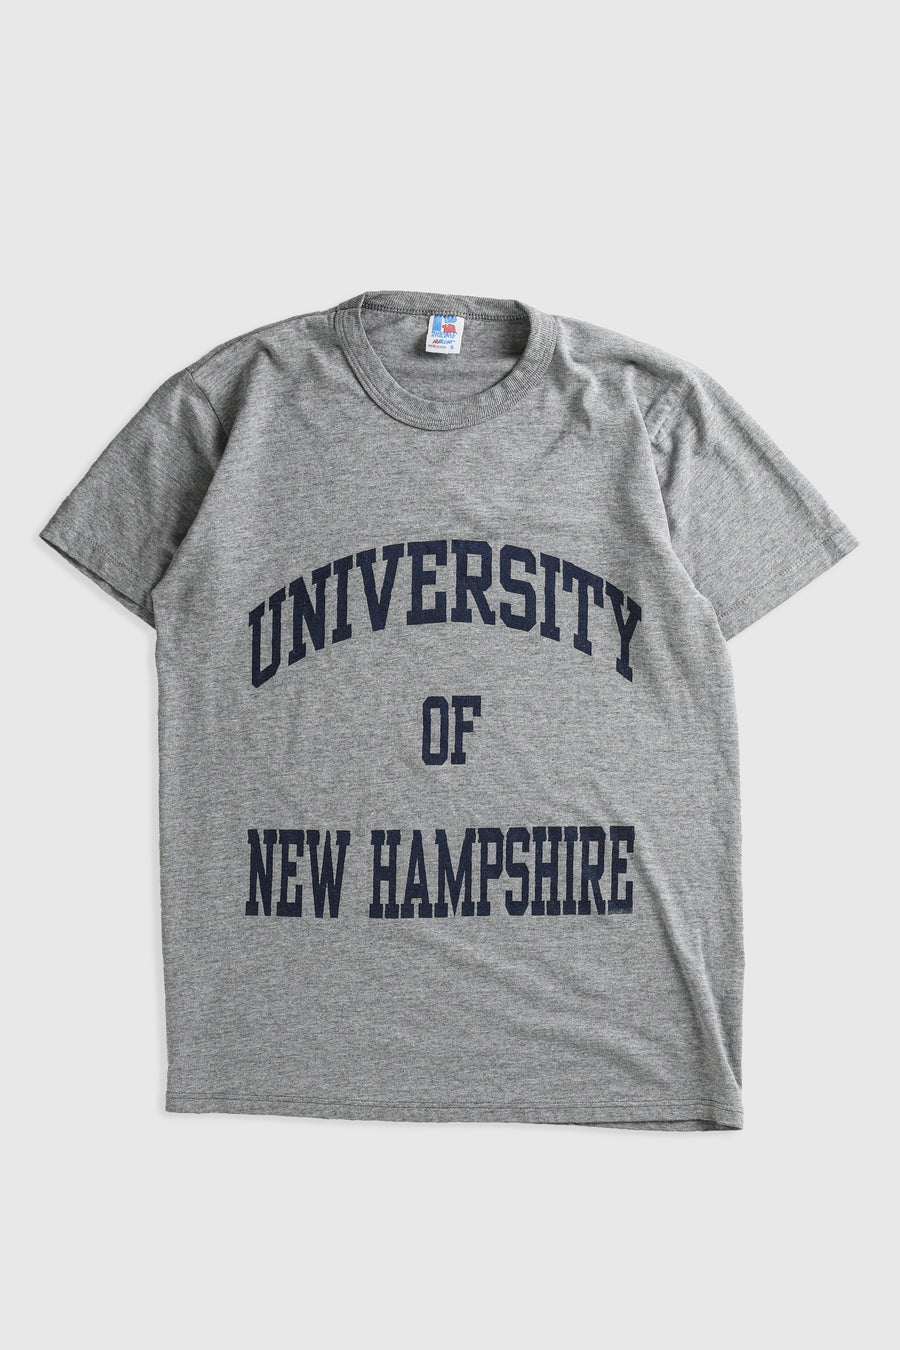 Vintage University of New Hampshire Tee